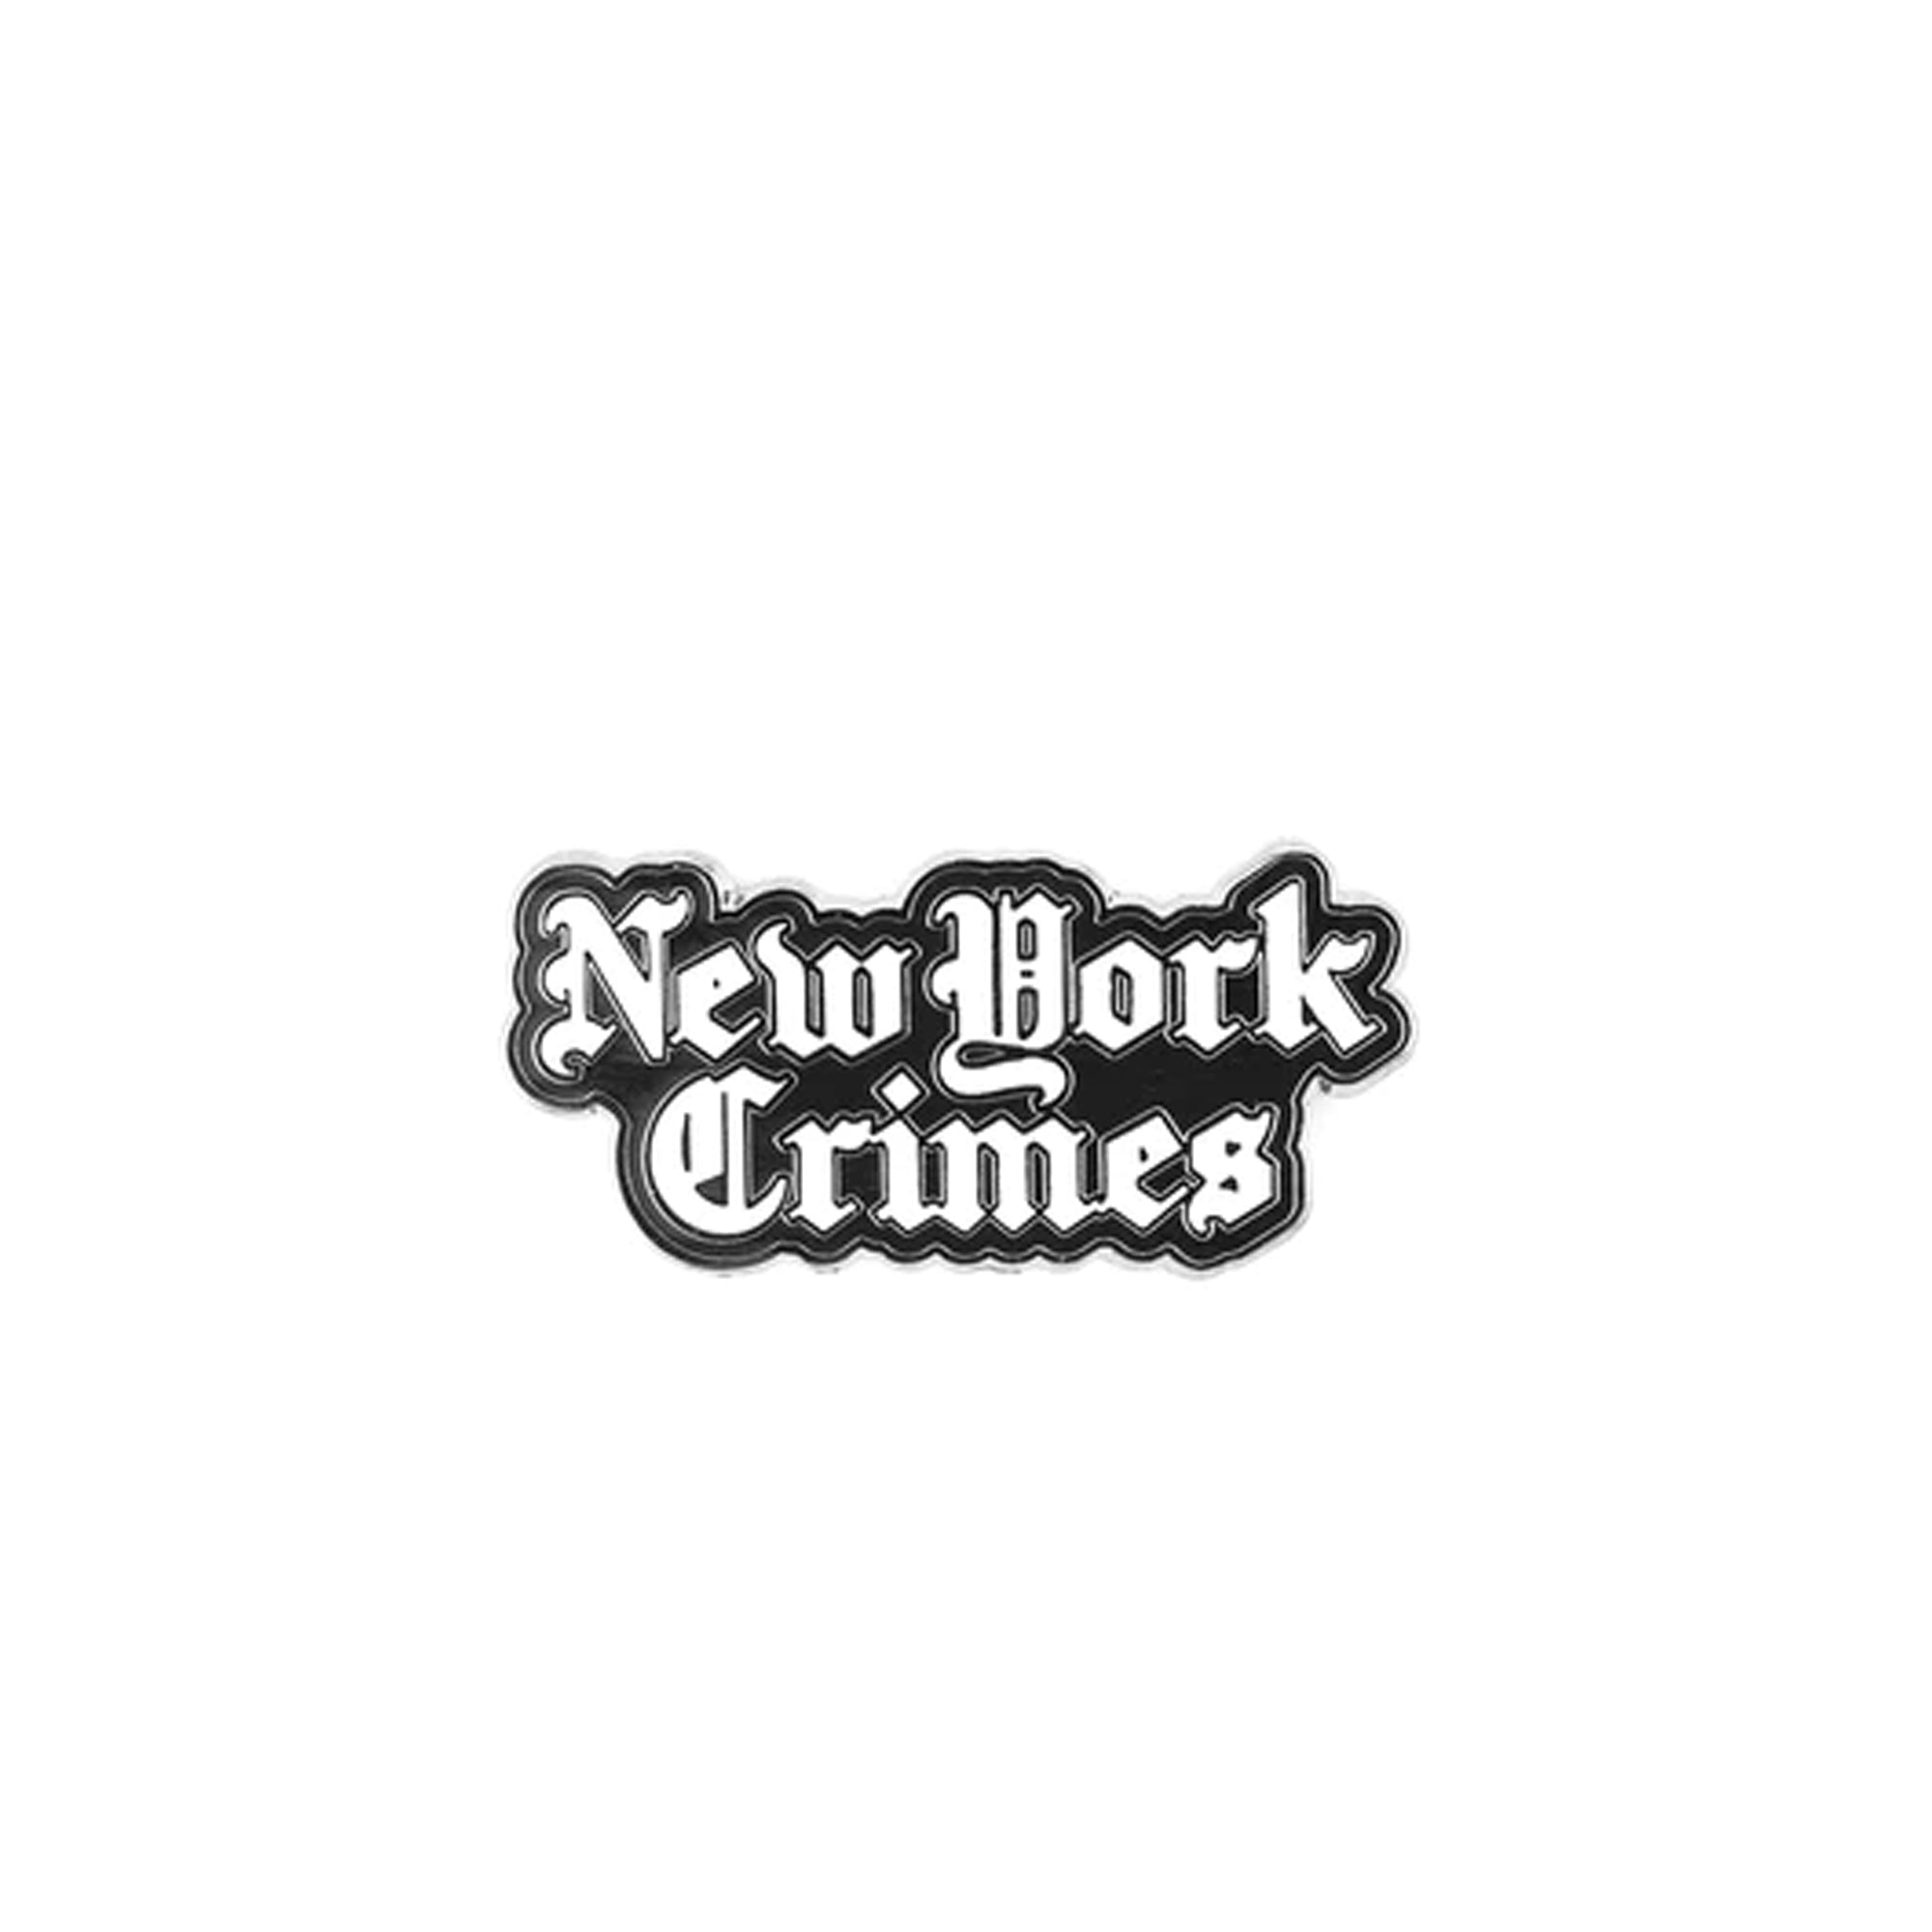 Hdqtrs New York Crimes Pin